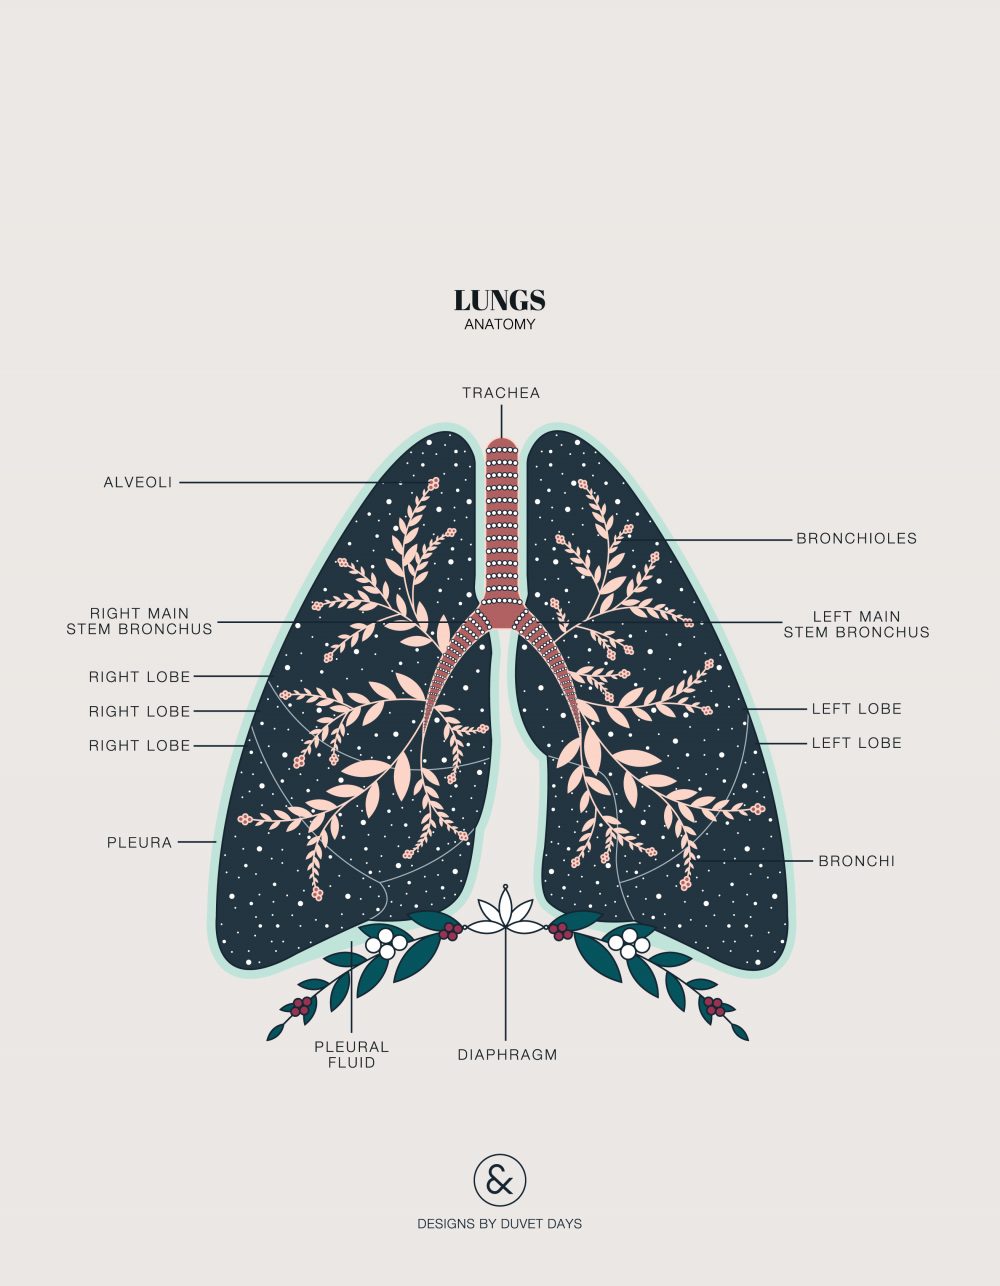 Duvet-Days_Anatomy-Illustrations_8.5x11_Lungs-Anatomy-31-1000x1286.jpg